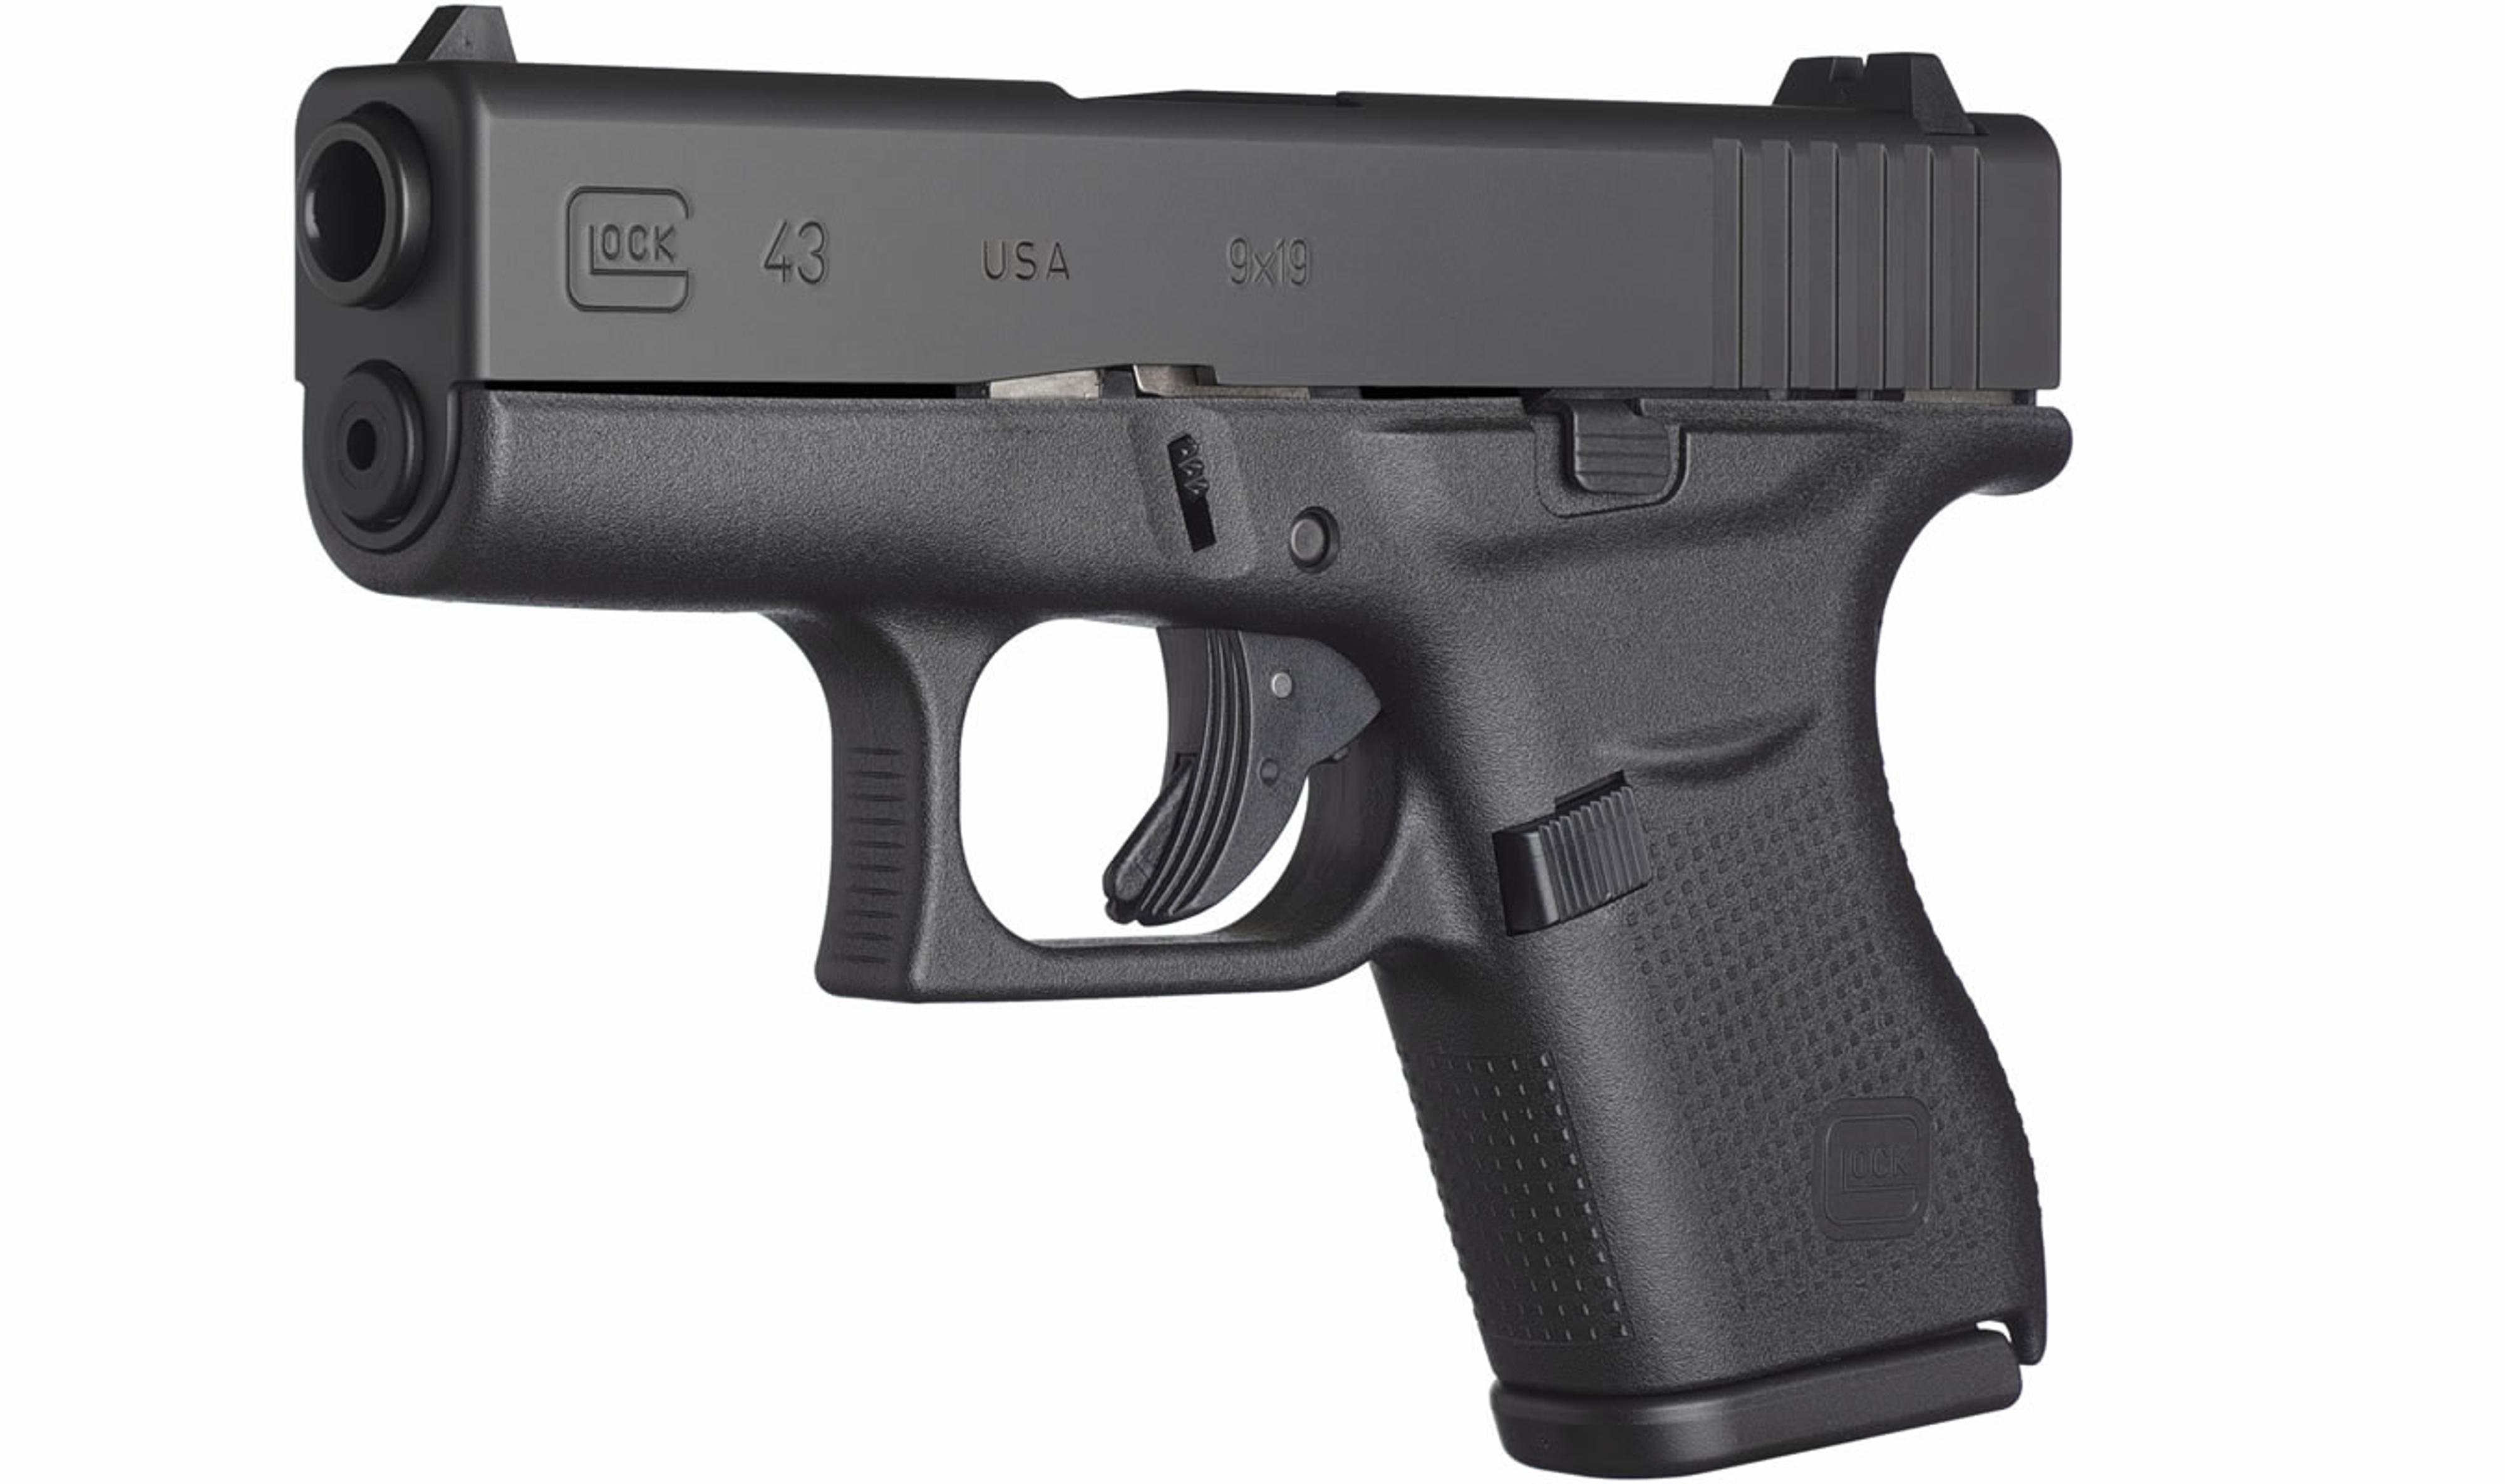  Glock G43 Usa 9mm